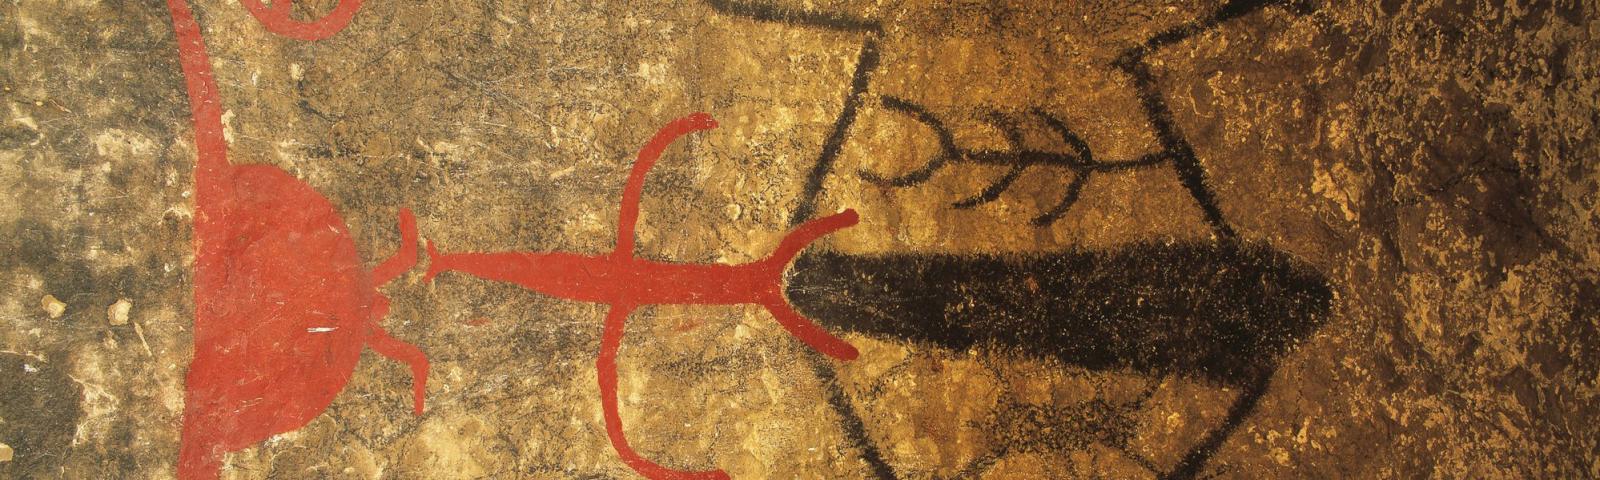 The South Island's Ancient Maori Rock Art